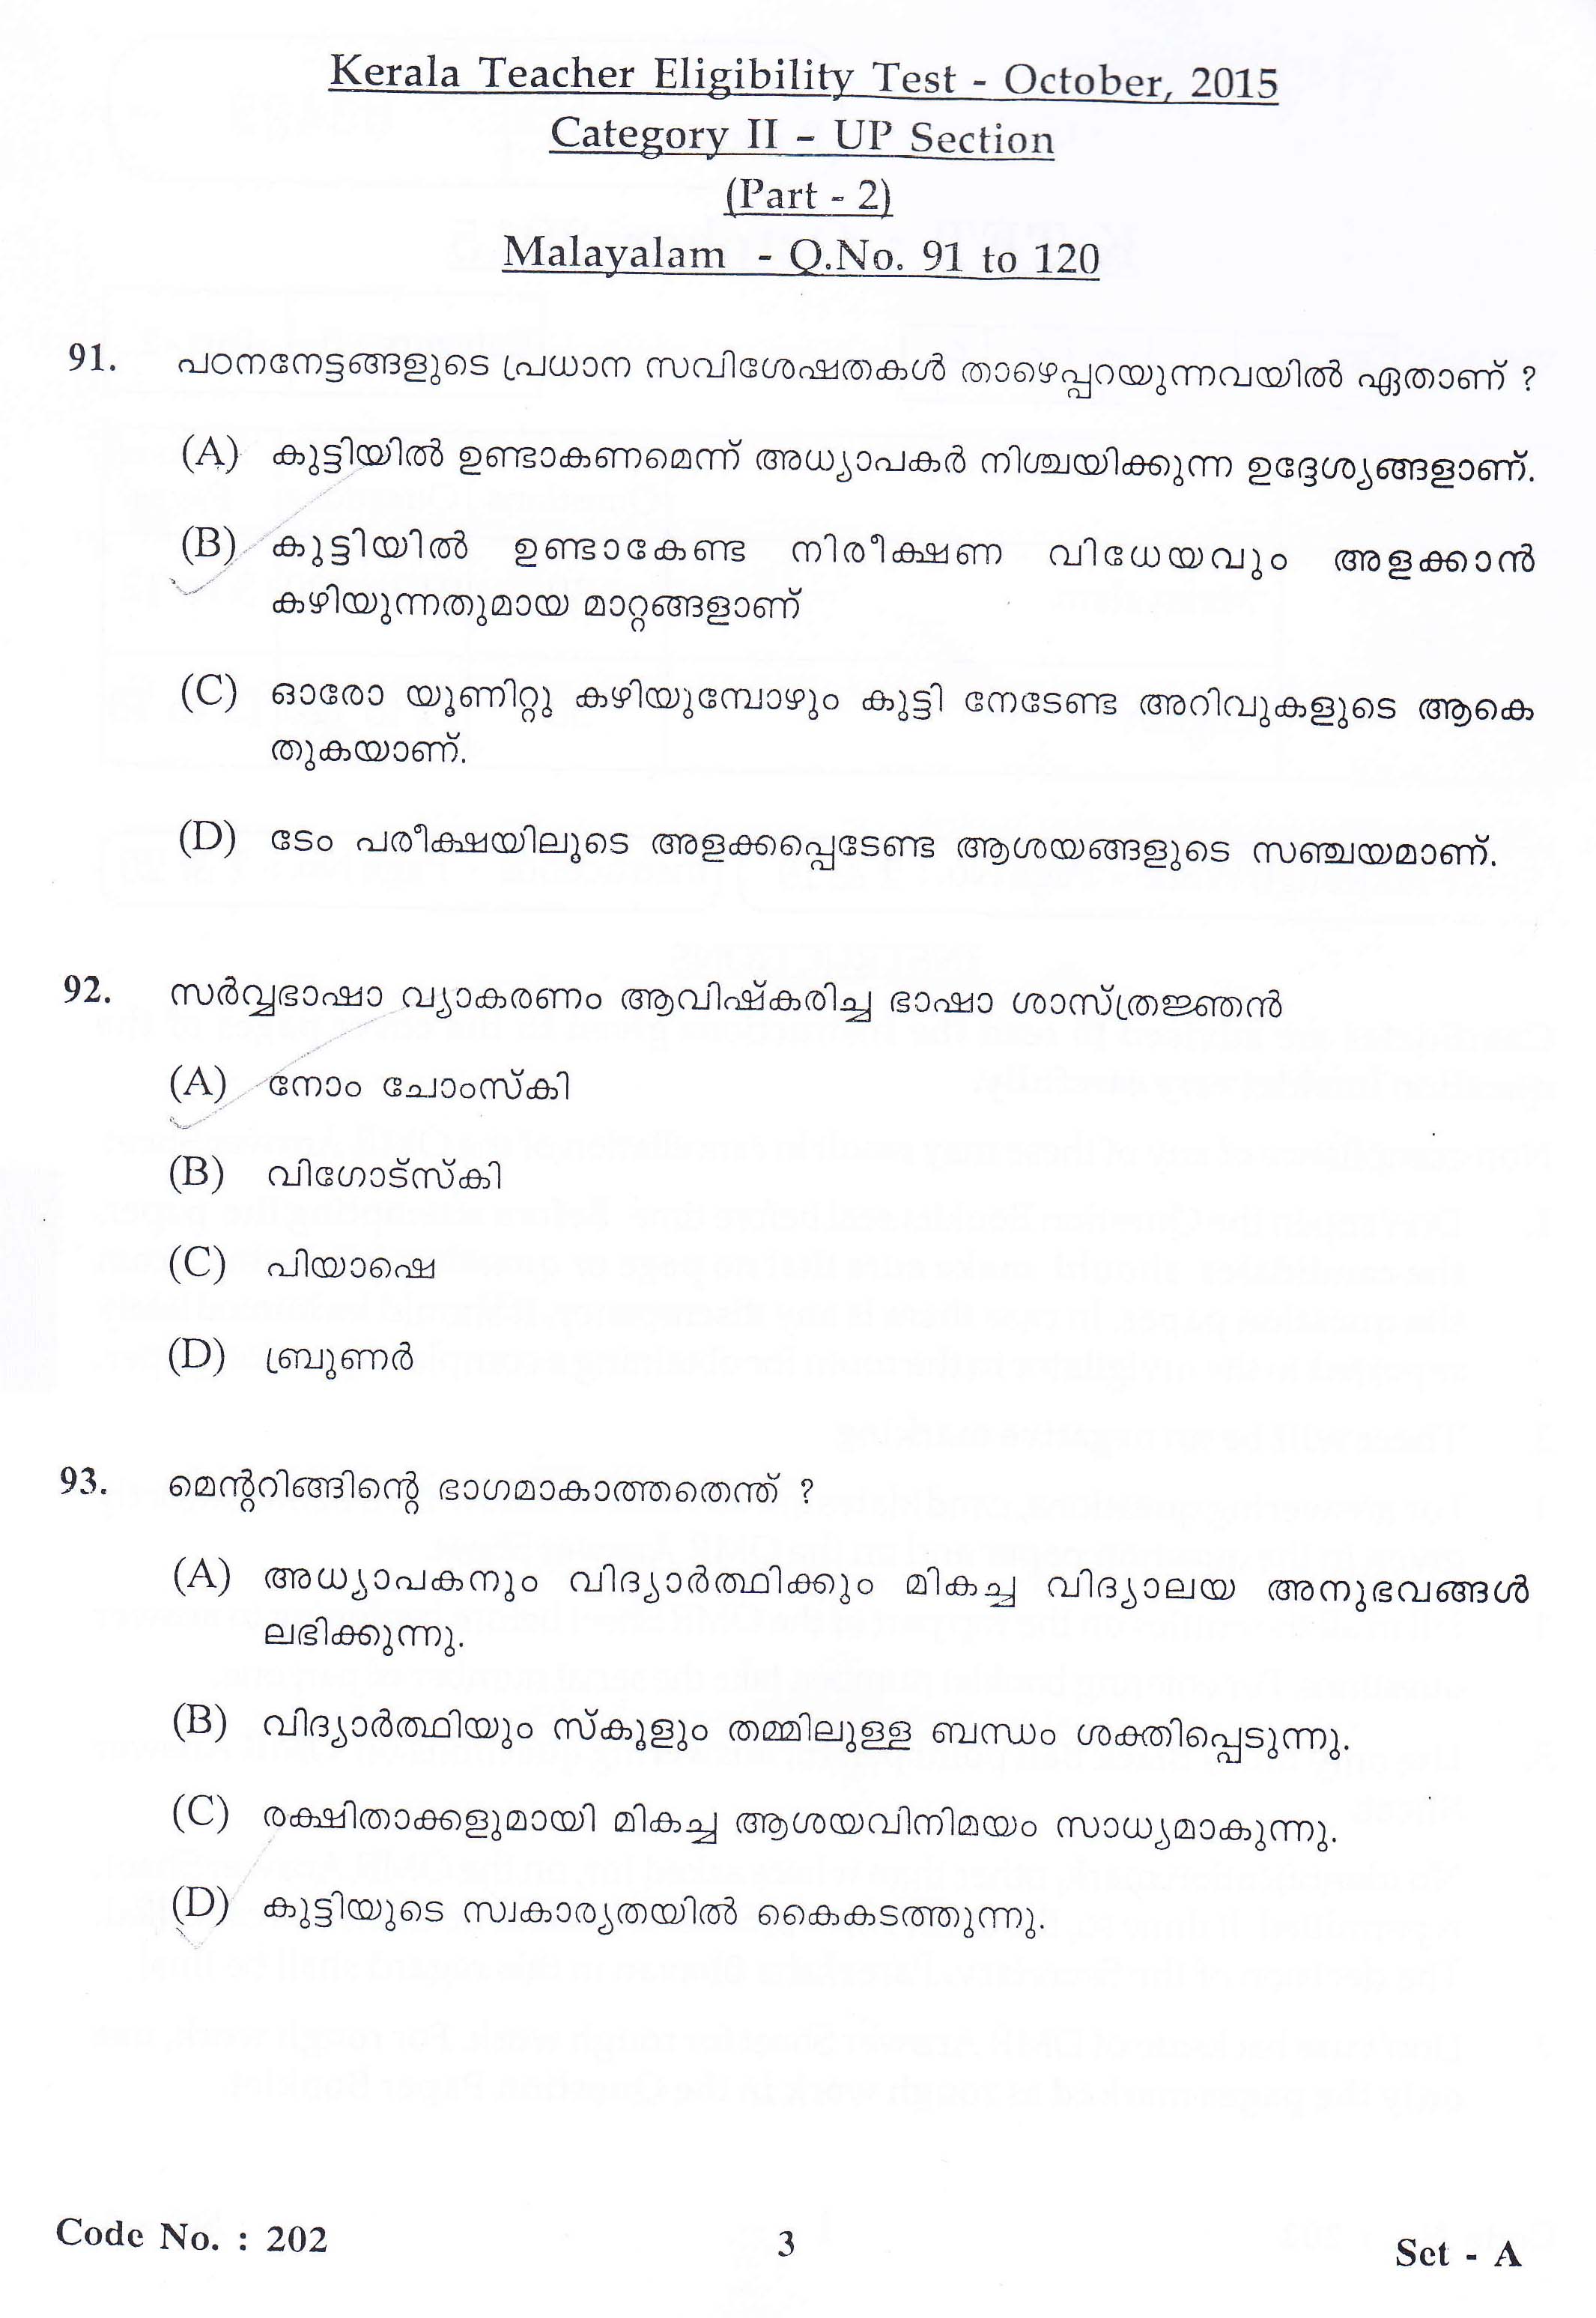 KTET Category II Part 2 Malayalam October 2015 1